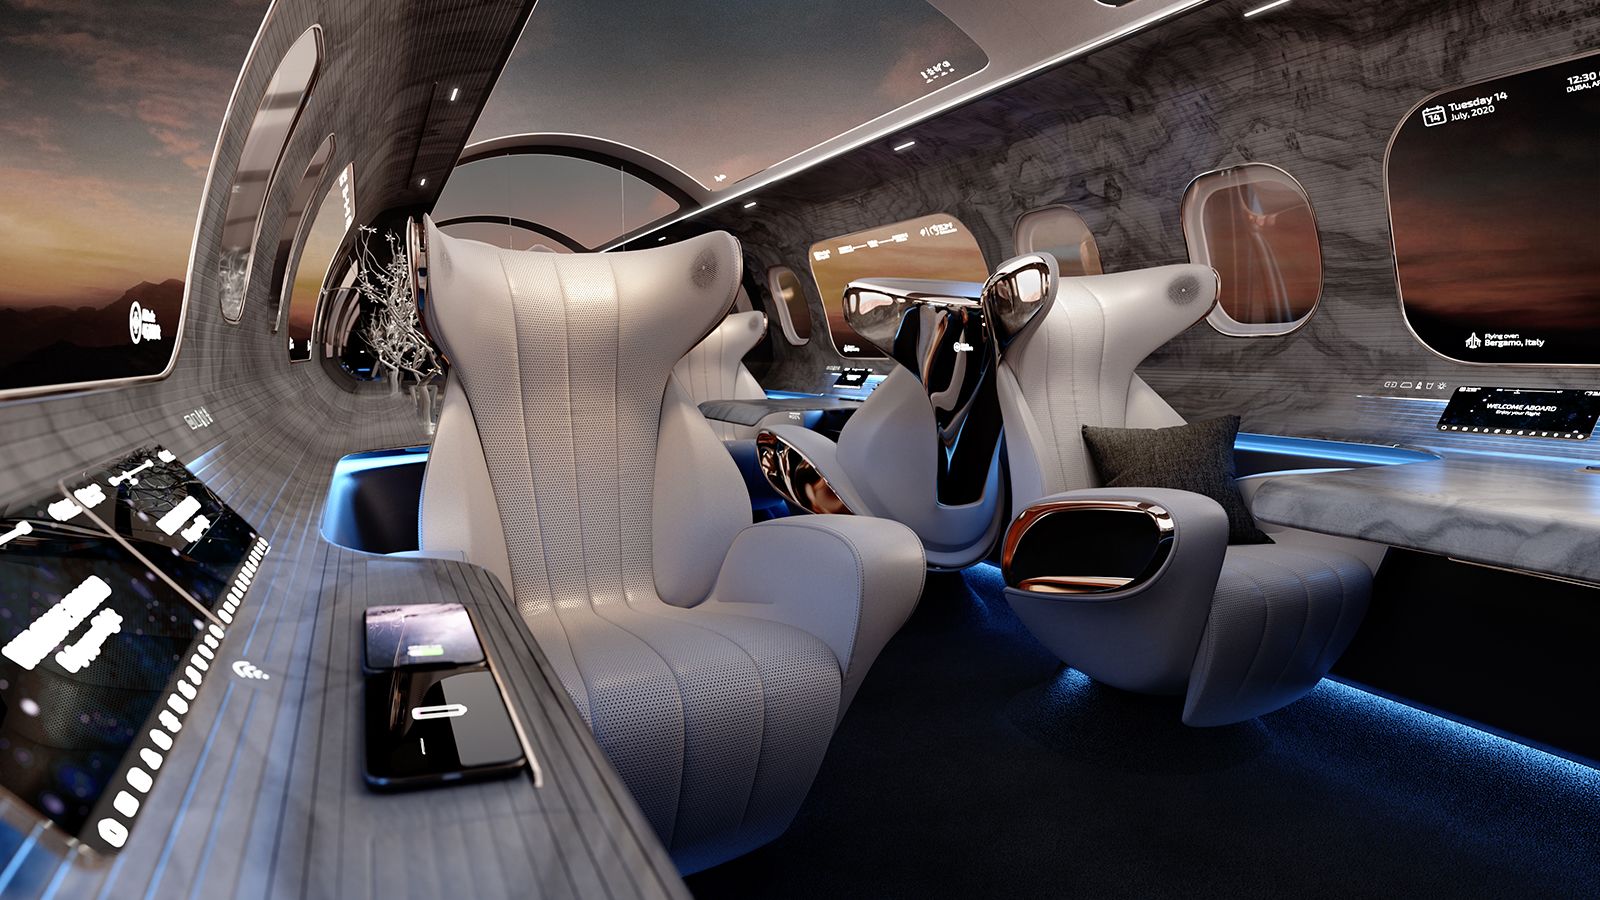 futuristic plane interior